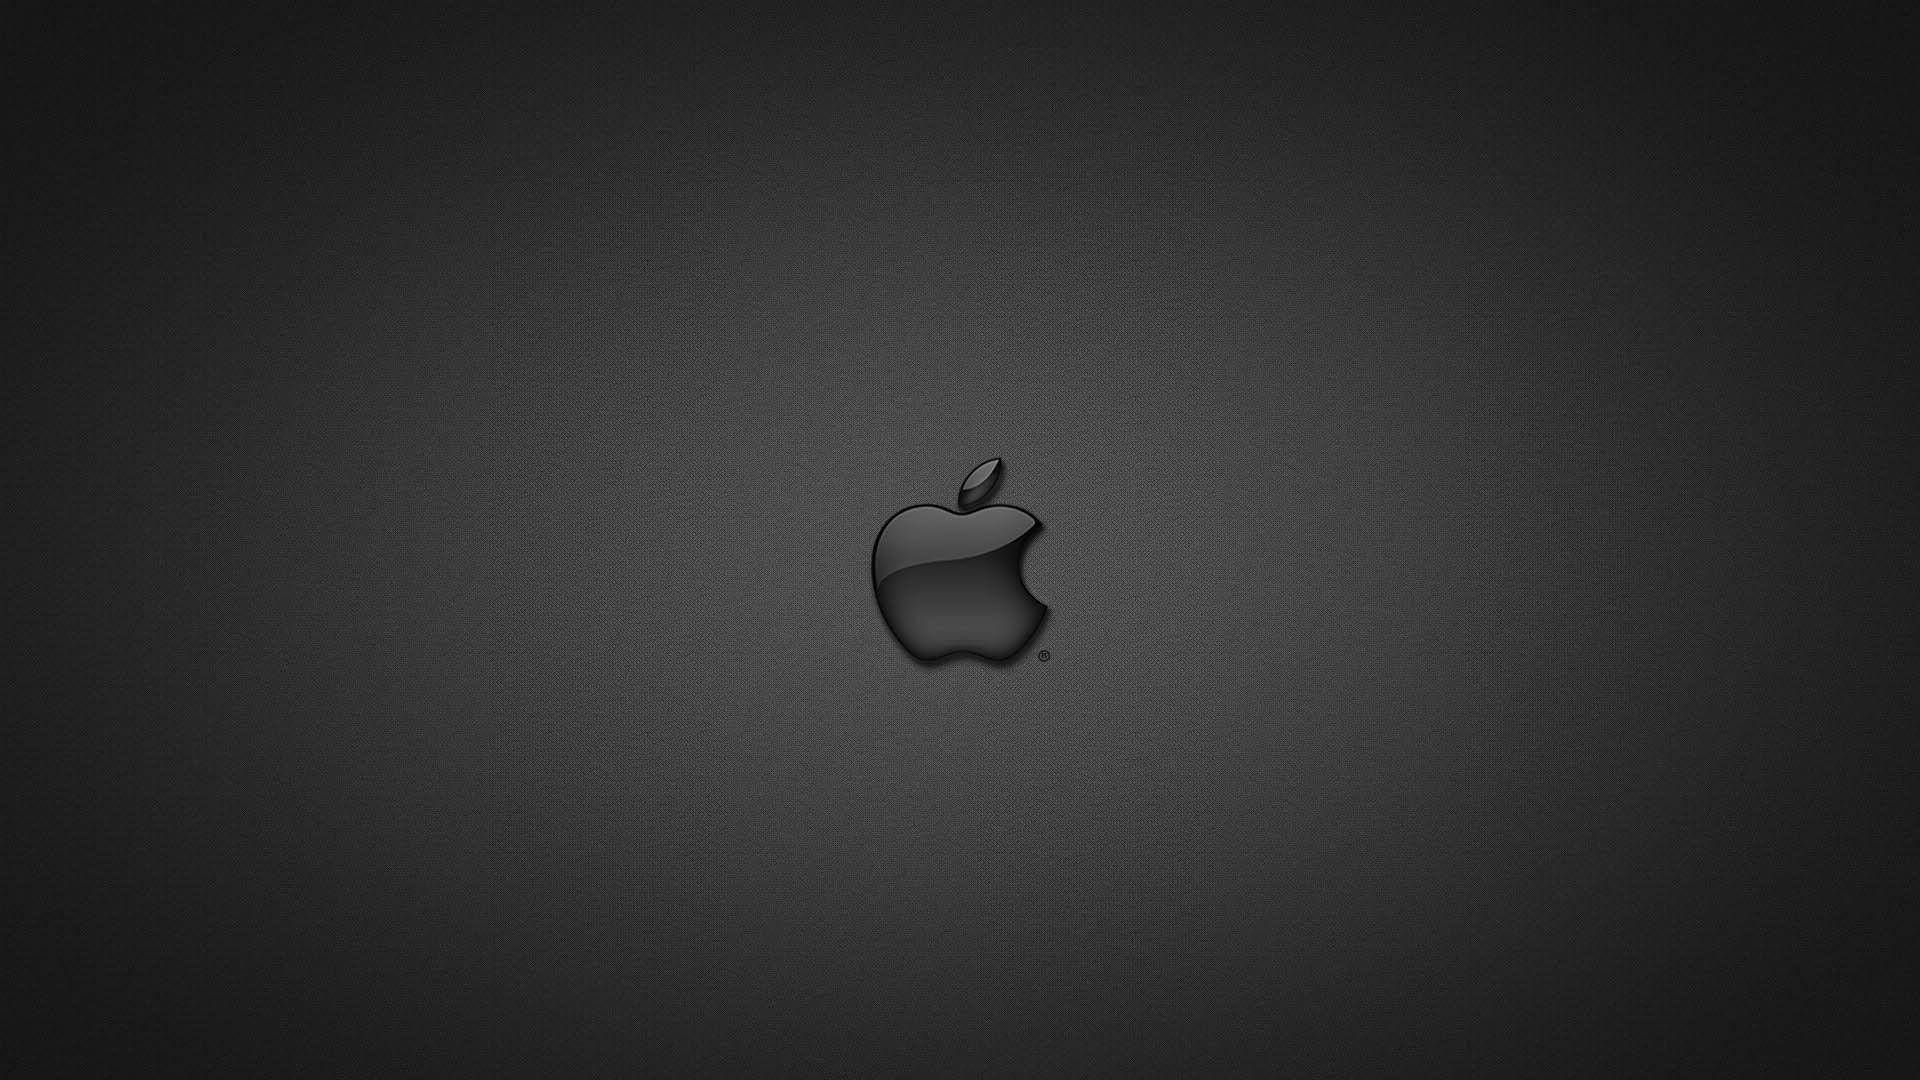 Matte Black Apple Icon In Solid Black